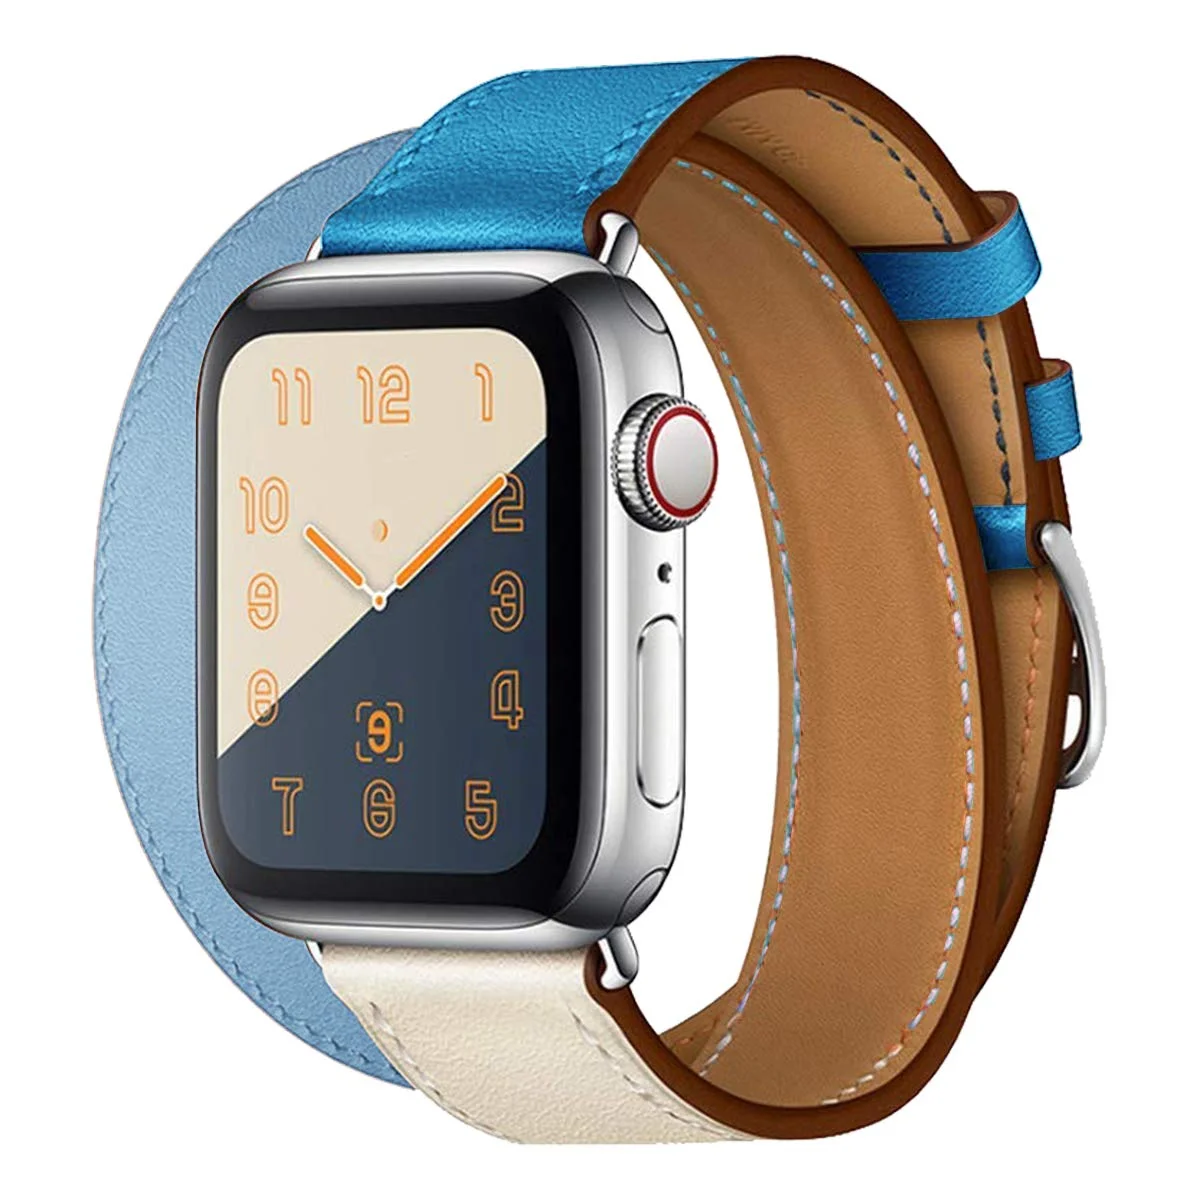 Řemínek iMore Double Tour Apple Watch Series 3/2/1 (38mm) - Béžový/Modrý